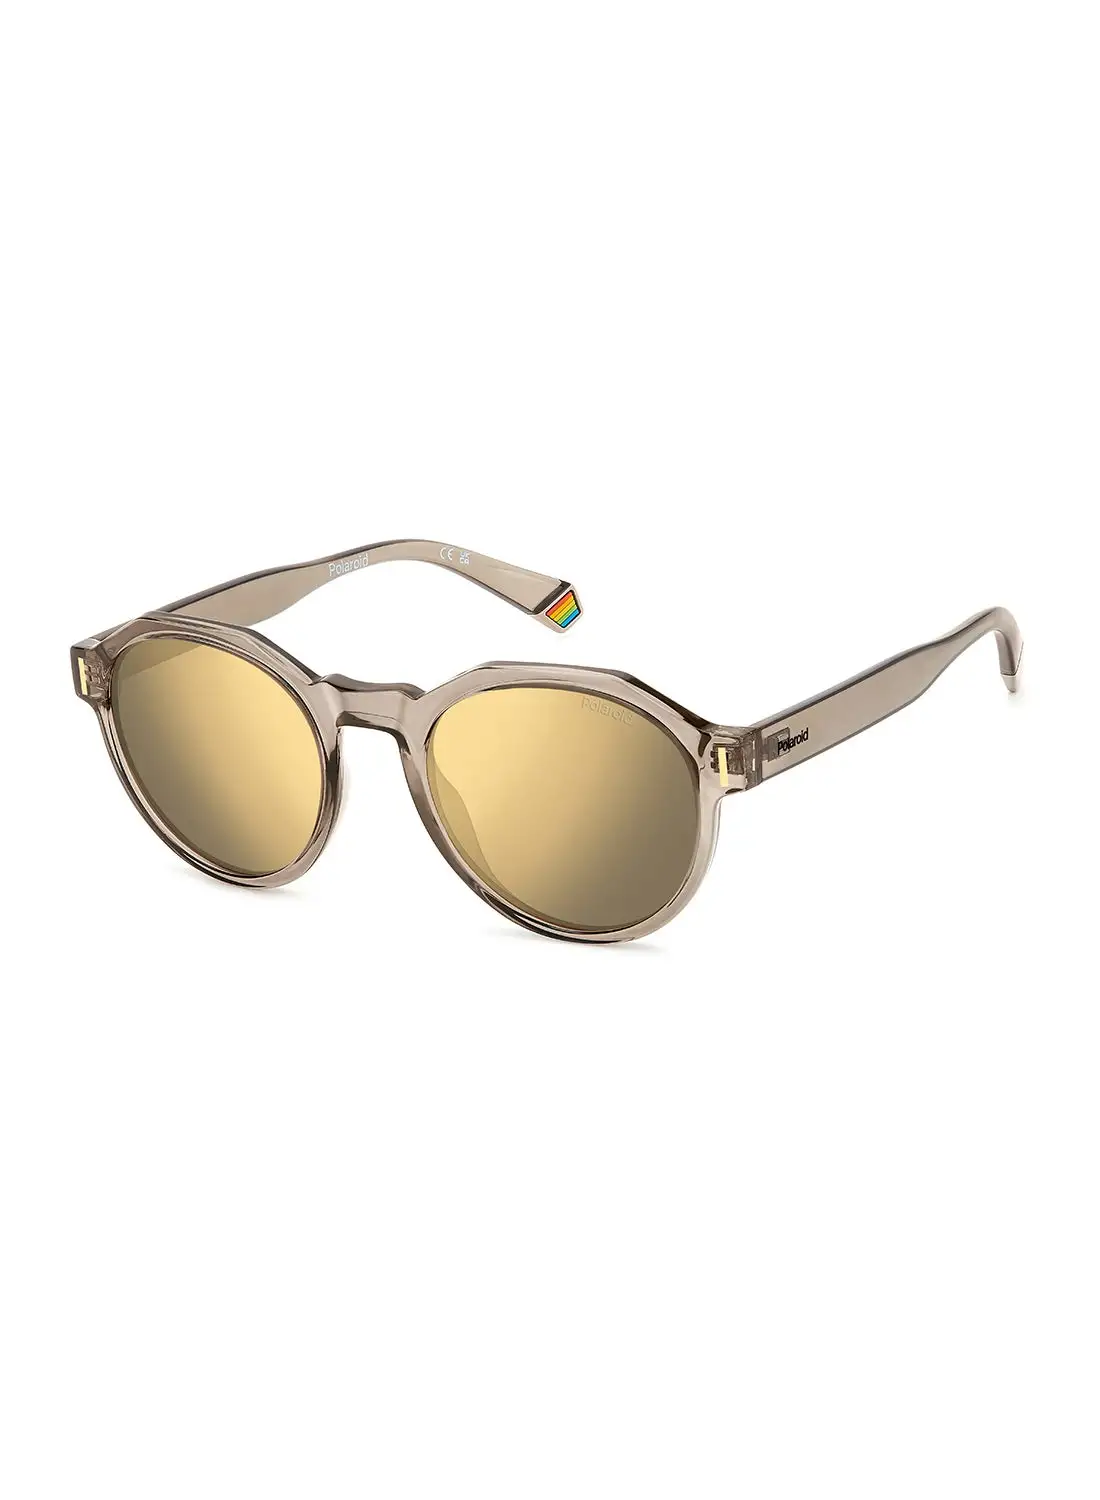 Polaroid Unisex Polarized Round Sunglasses - Pld 6207/S Beige Millimeter - Lens Size: 52 Mm